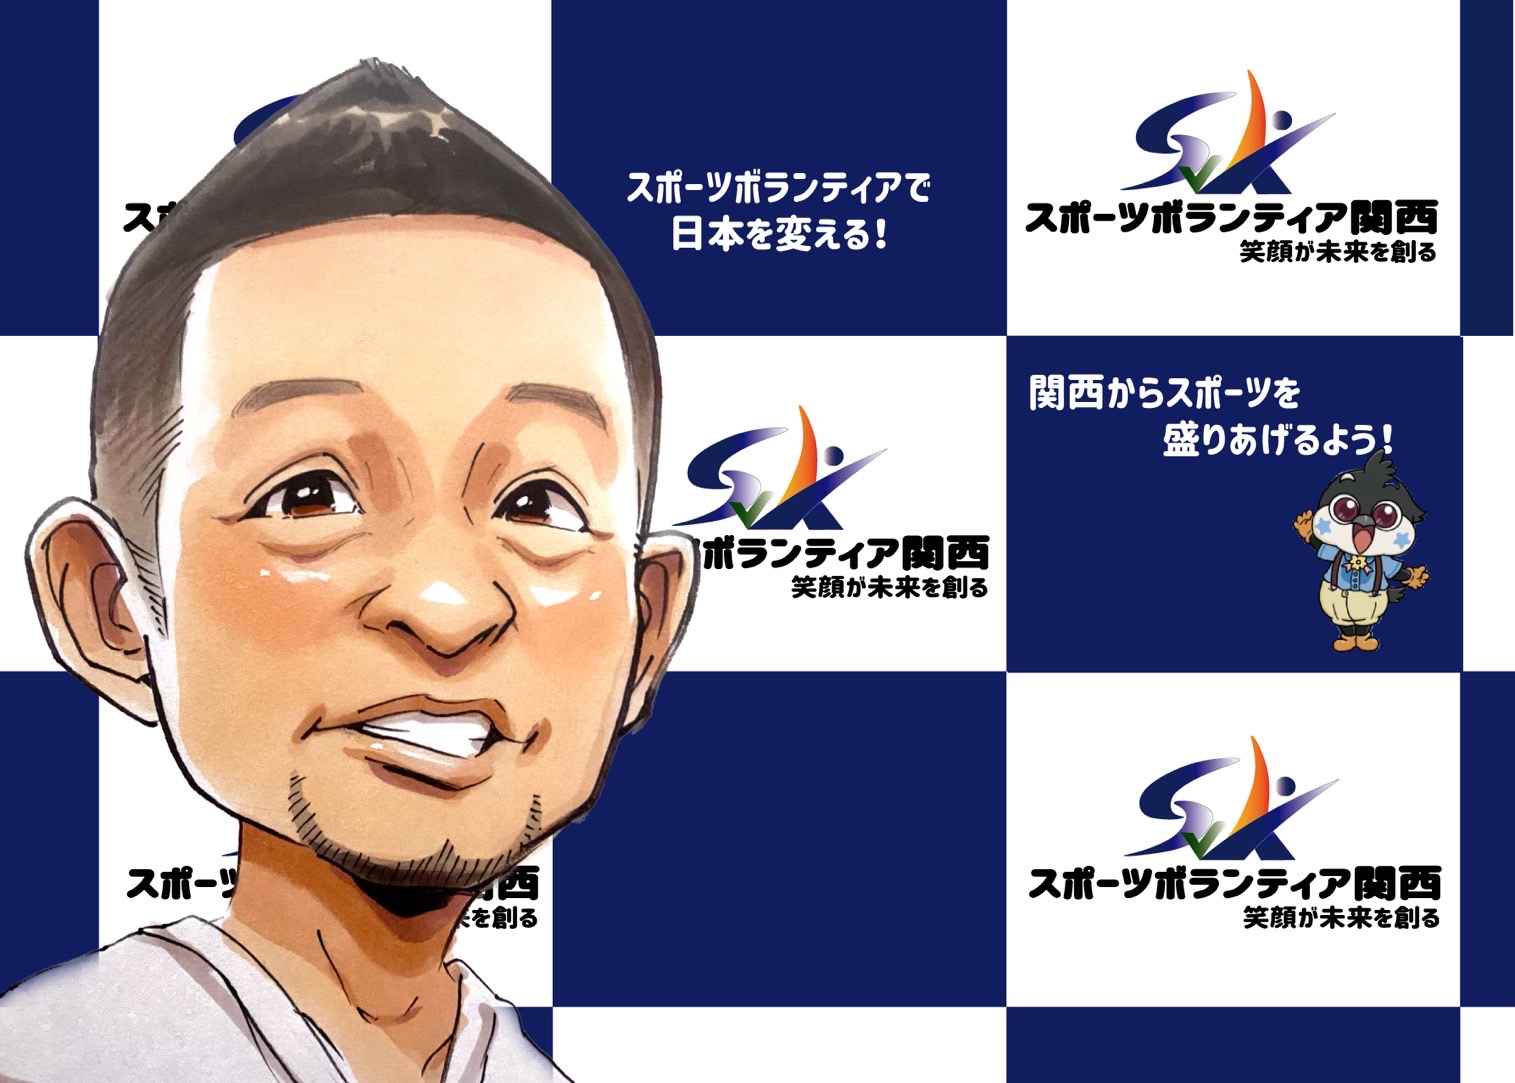 Sports Volunteer Kansai